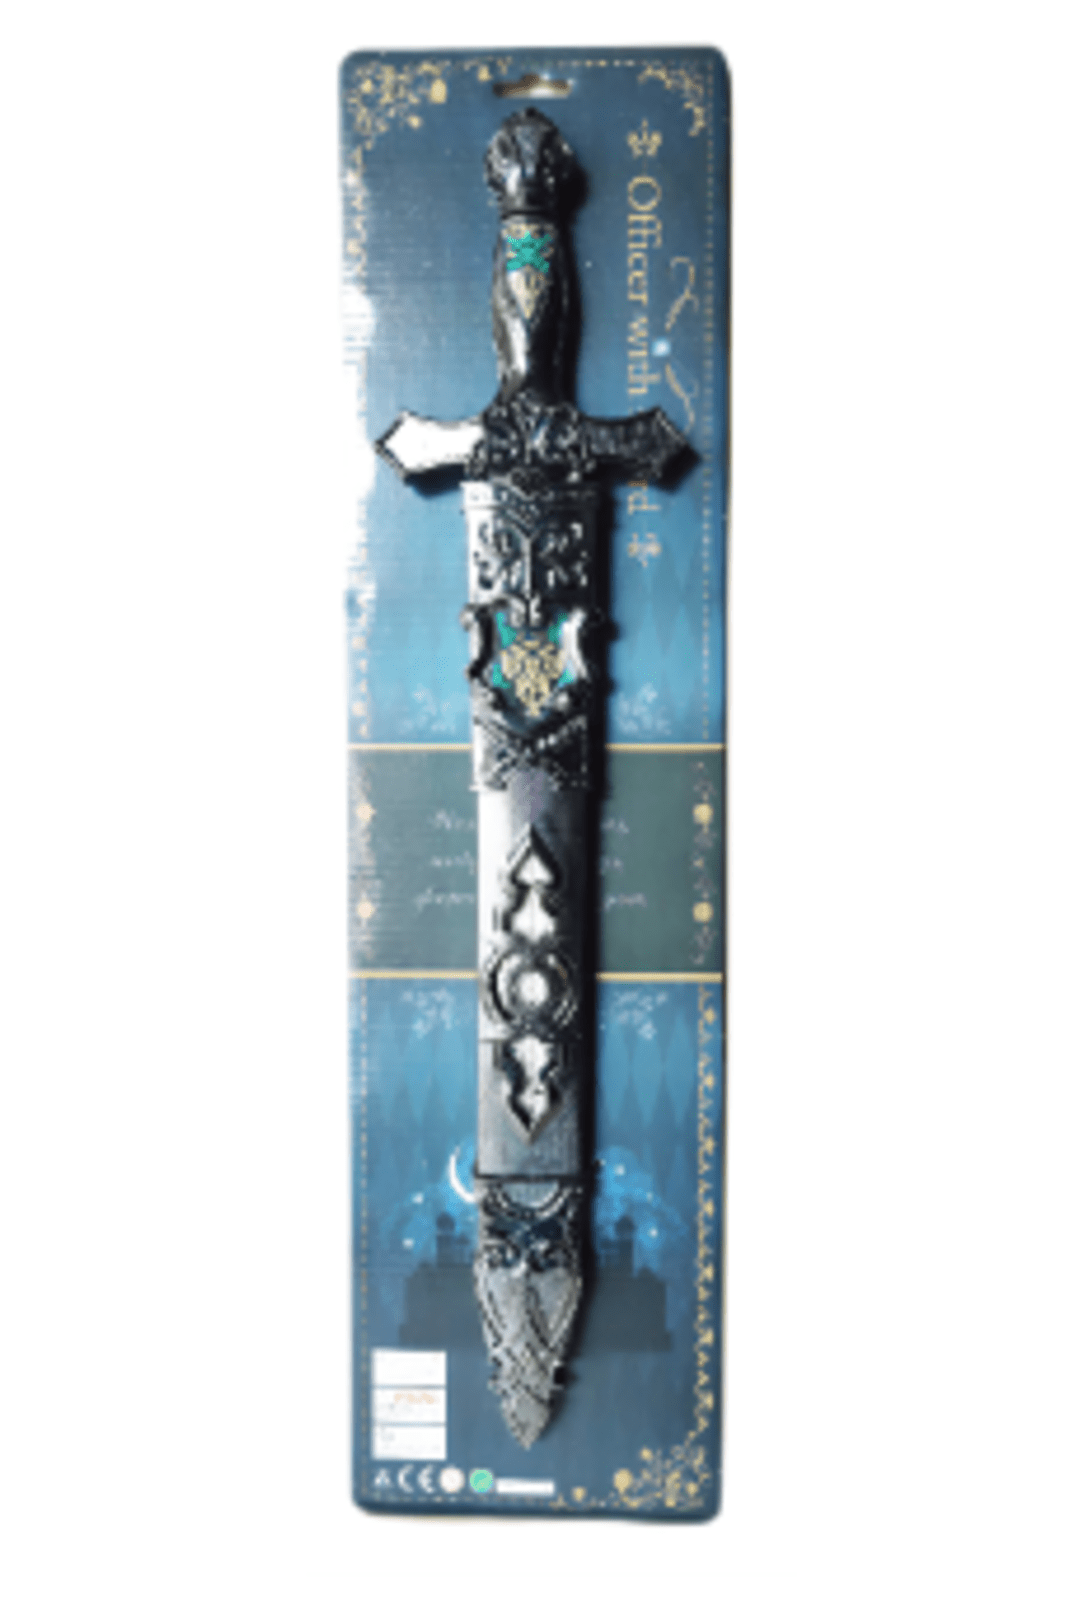 Silver Knight Sword with Black Sheath